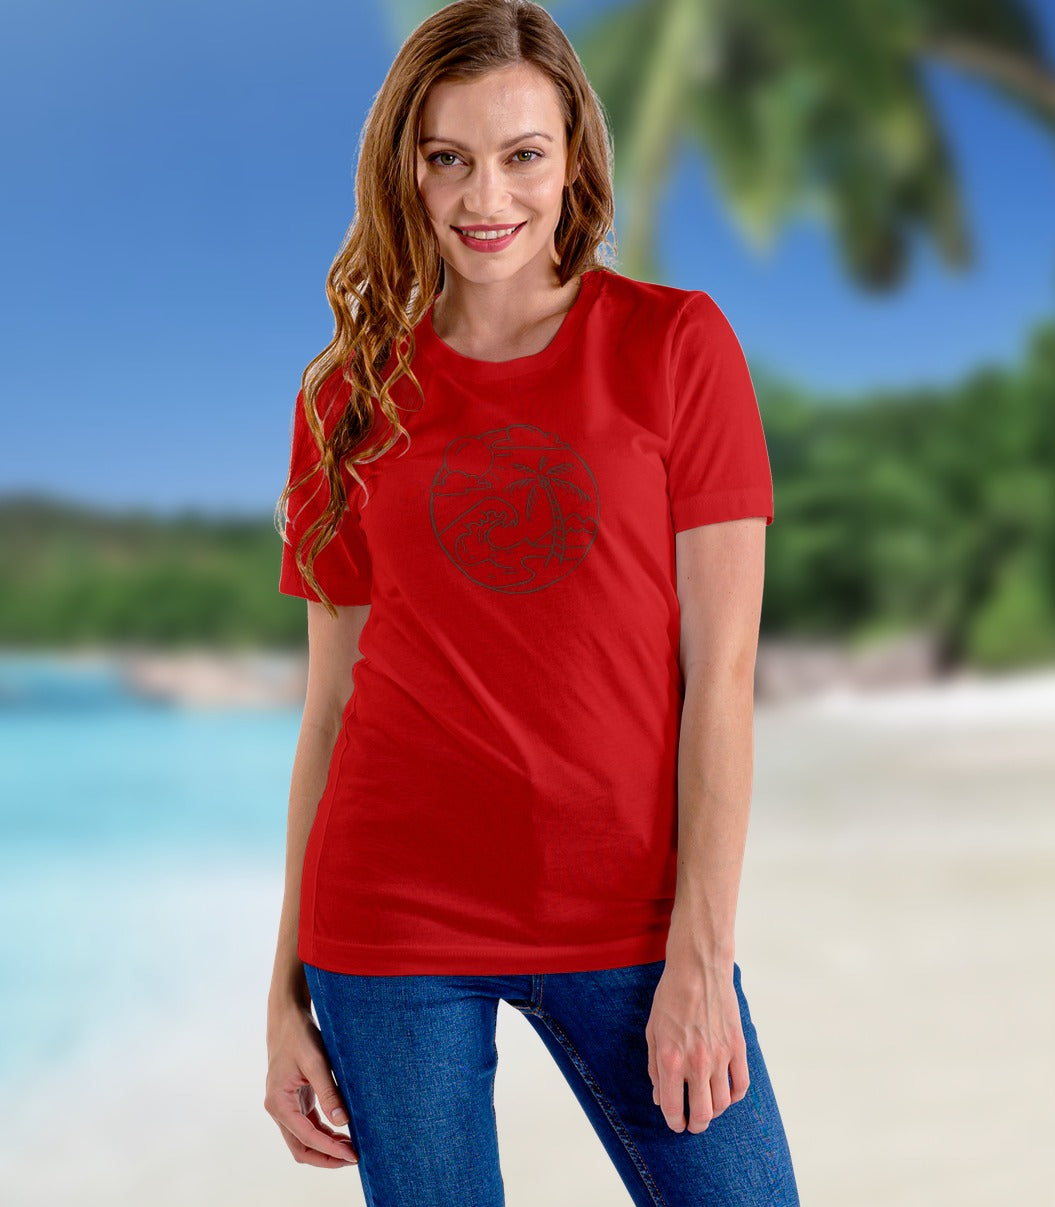 Beach Holiday Women's Boyfriend T-shirt